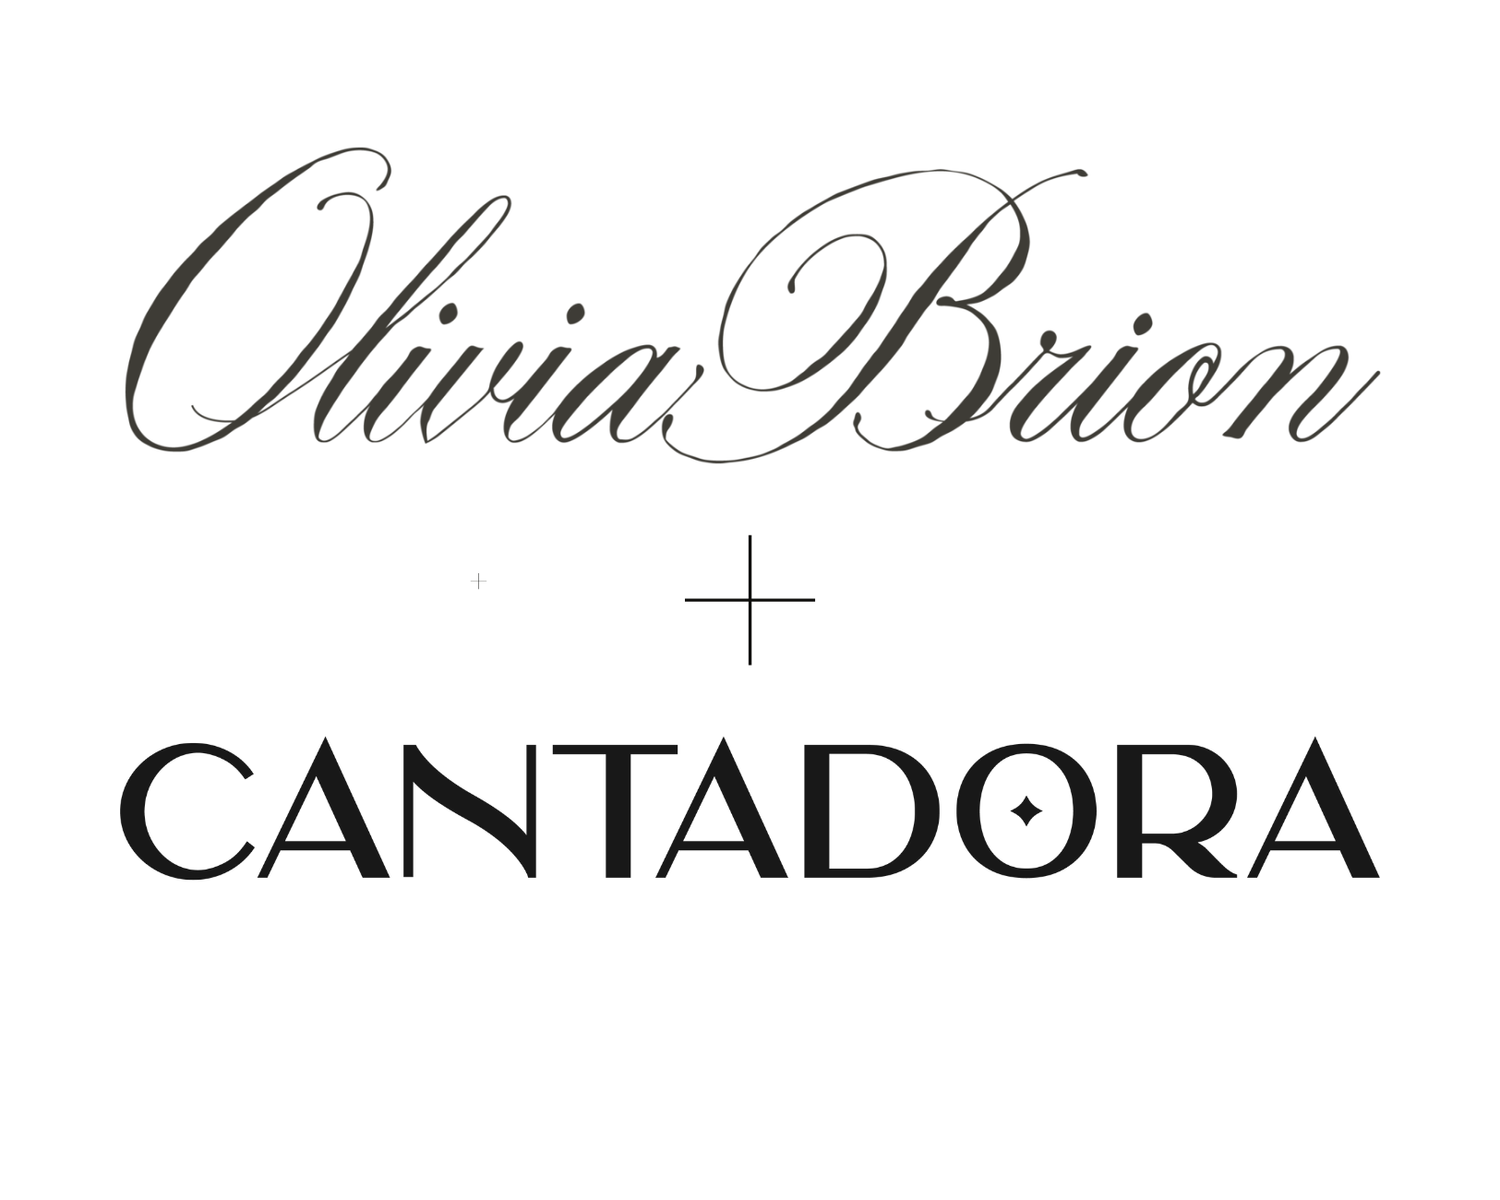 Olivia Brion & Cantadora Wines